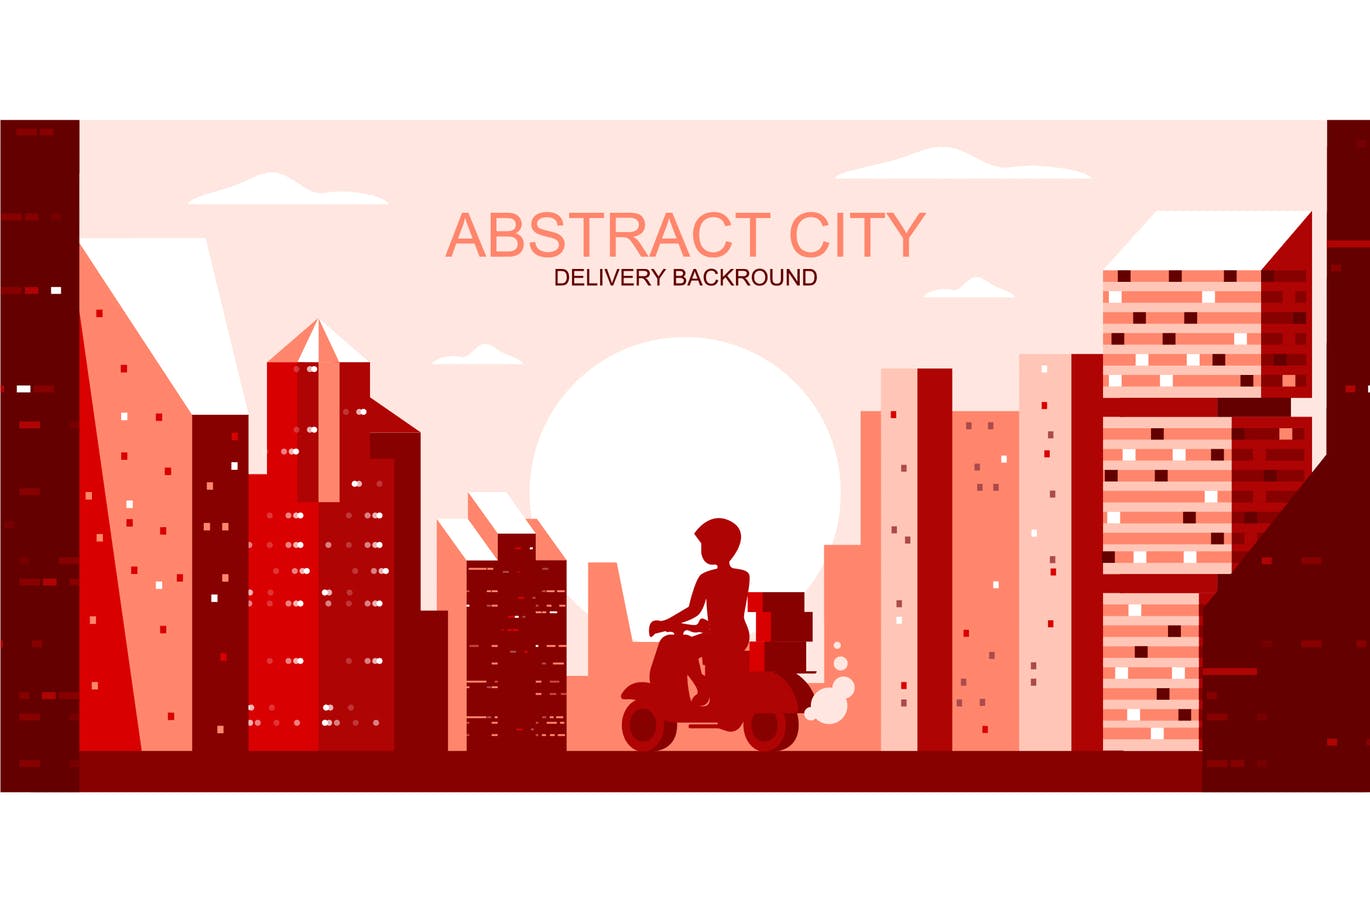 城市物流配送主题网站Header设计矢量插画蚂蚁素材精选 Delivery City Vector Illustration Header Website插图